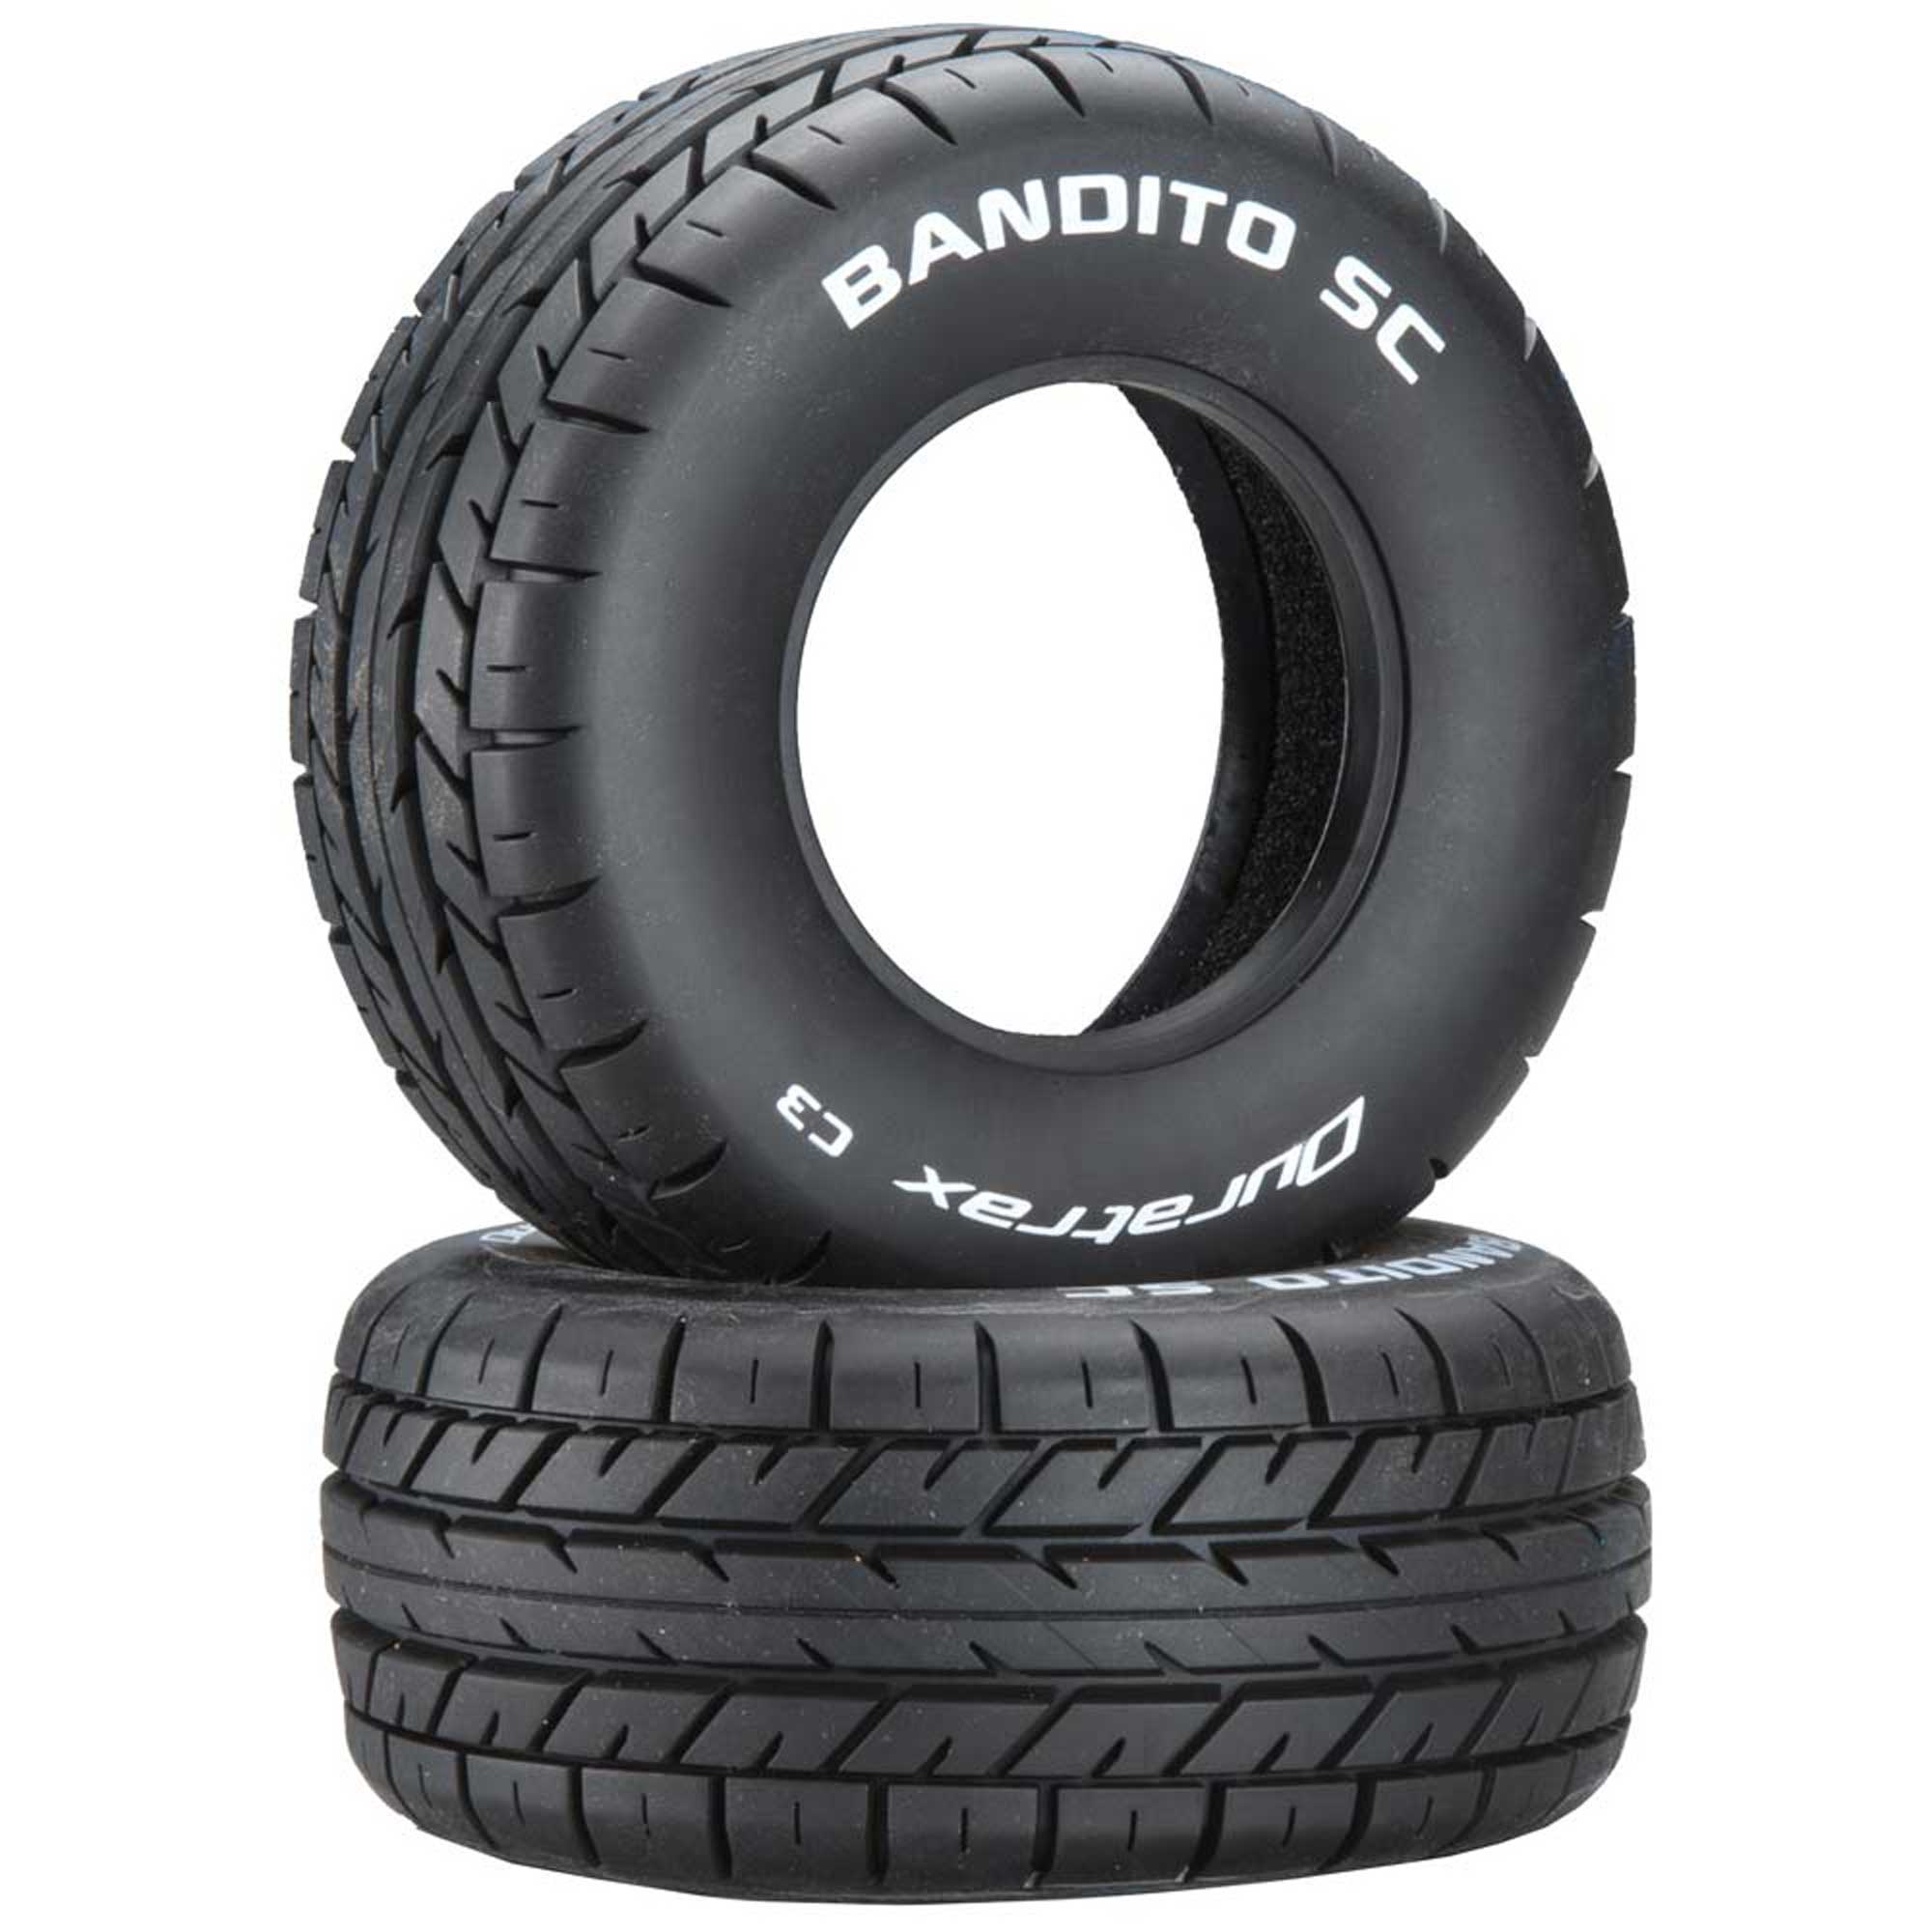 Duratrax DTXC3798 Bandito SC On-Road Tire C3 2